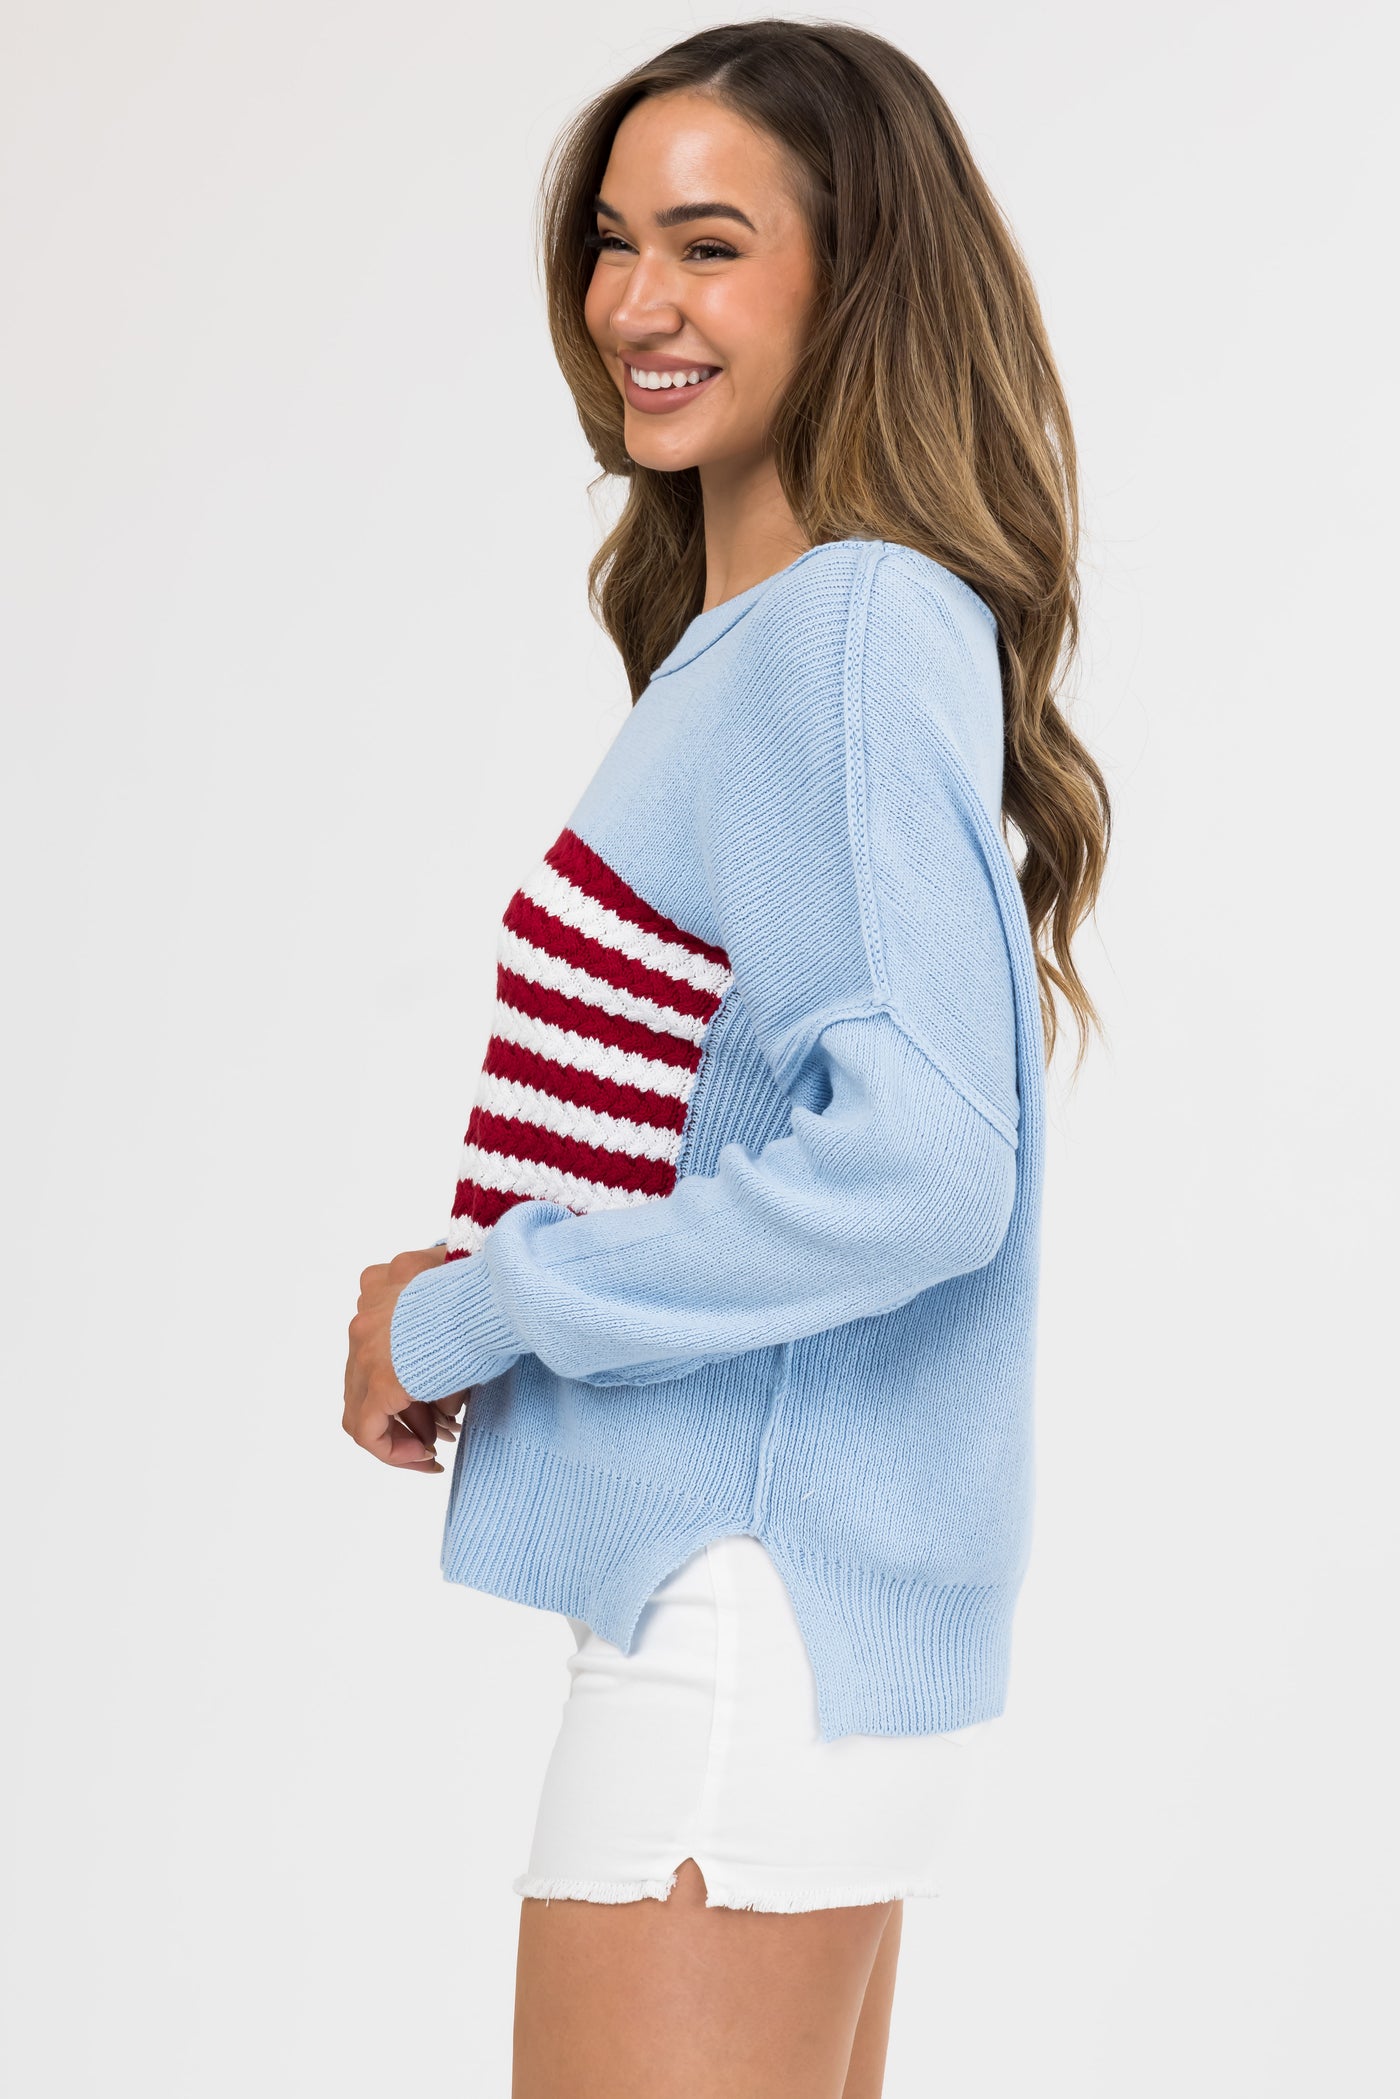 Baby Blue American Flag Crochet Knit Sweater